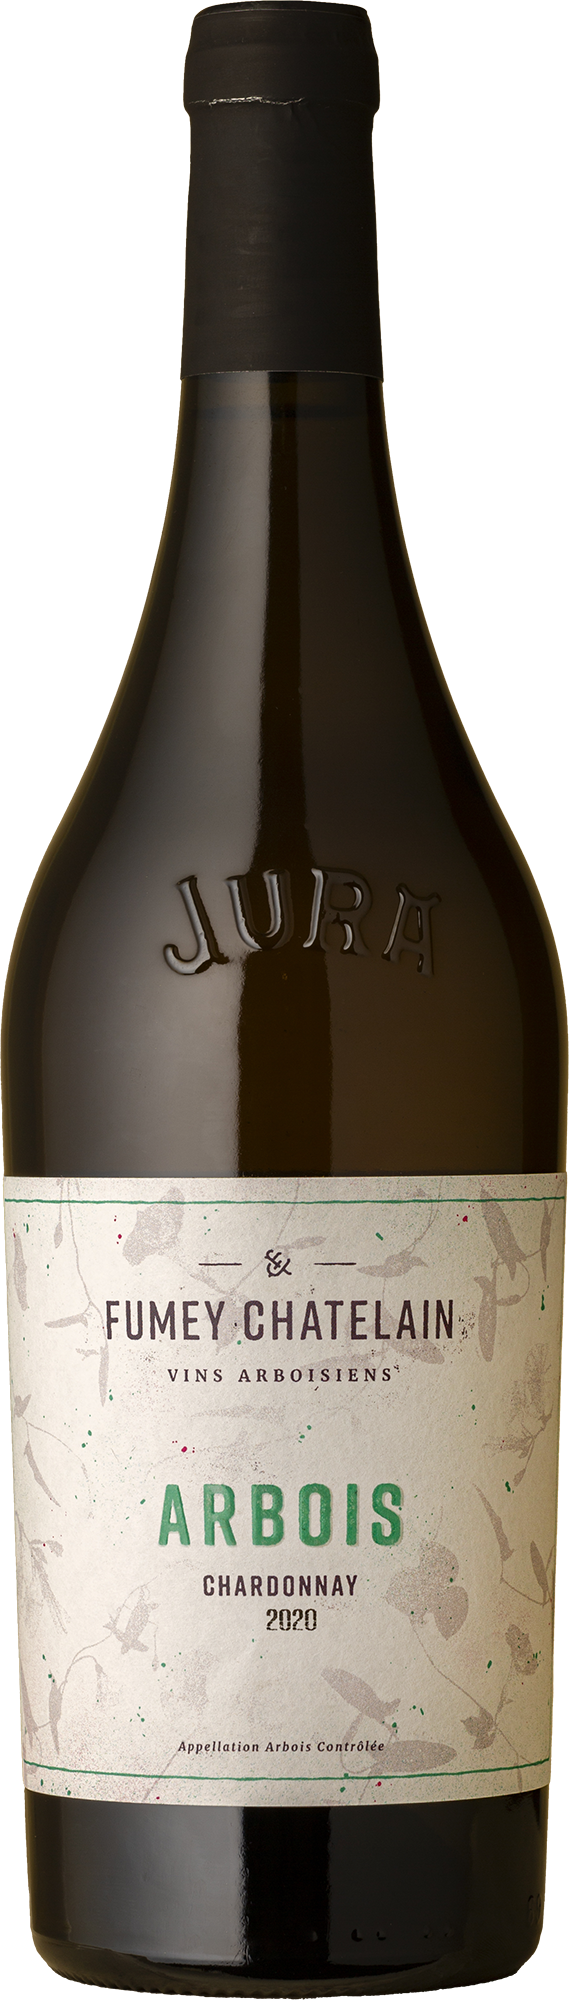 Fumey Chatelain - Arbois Chardonnay 2020 White Wine